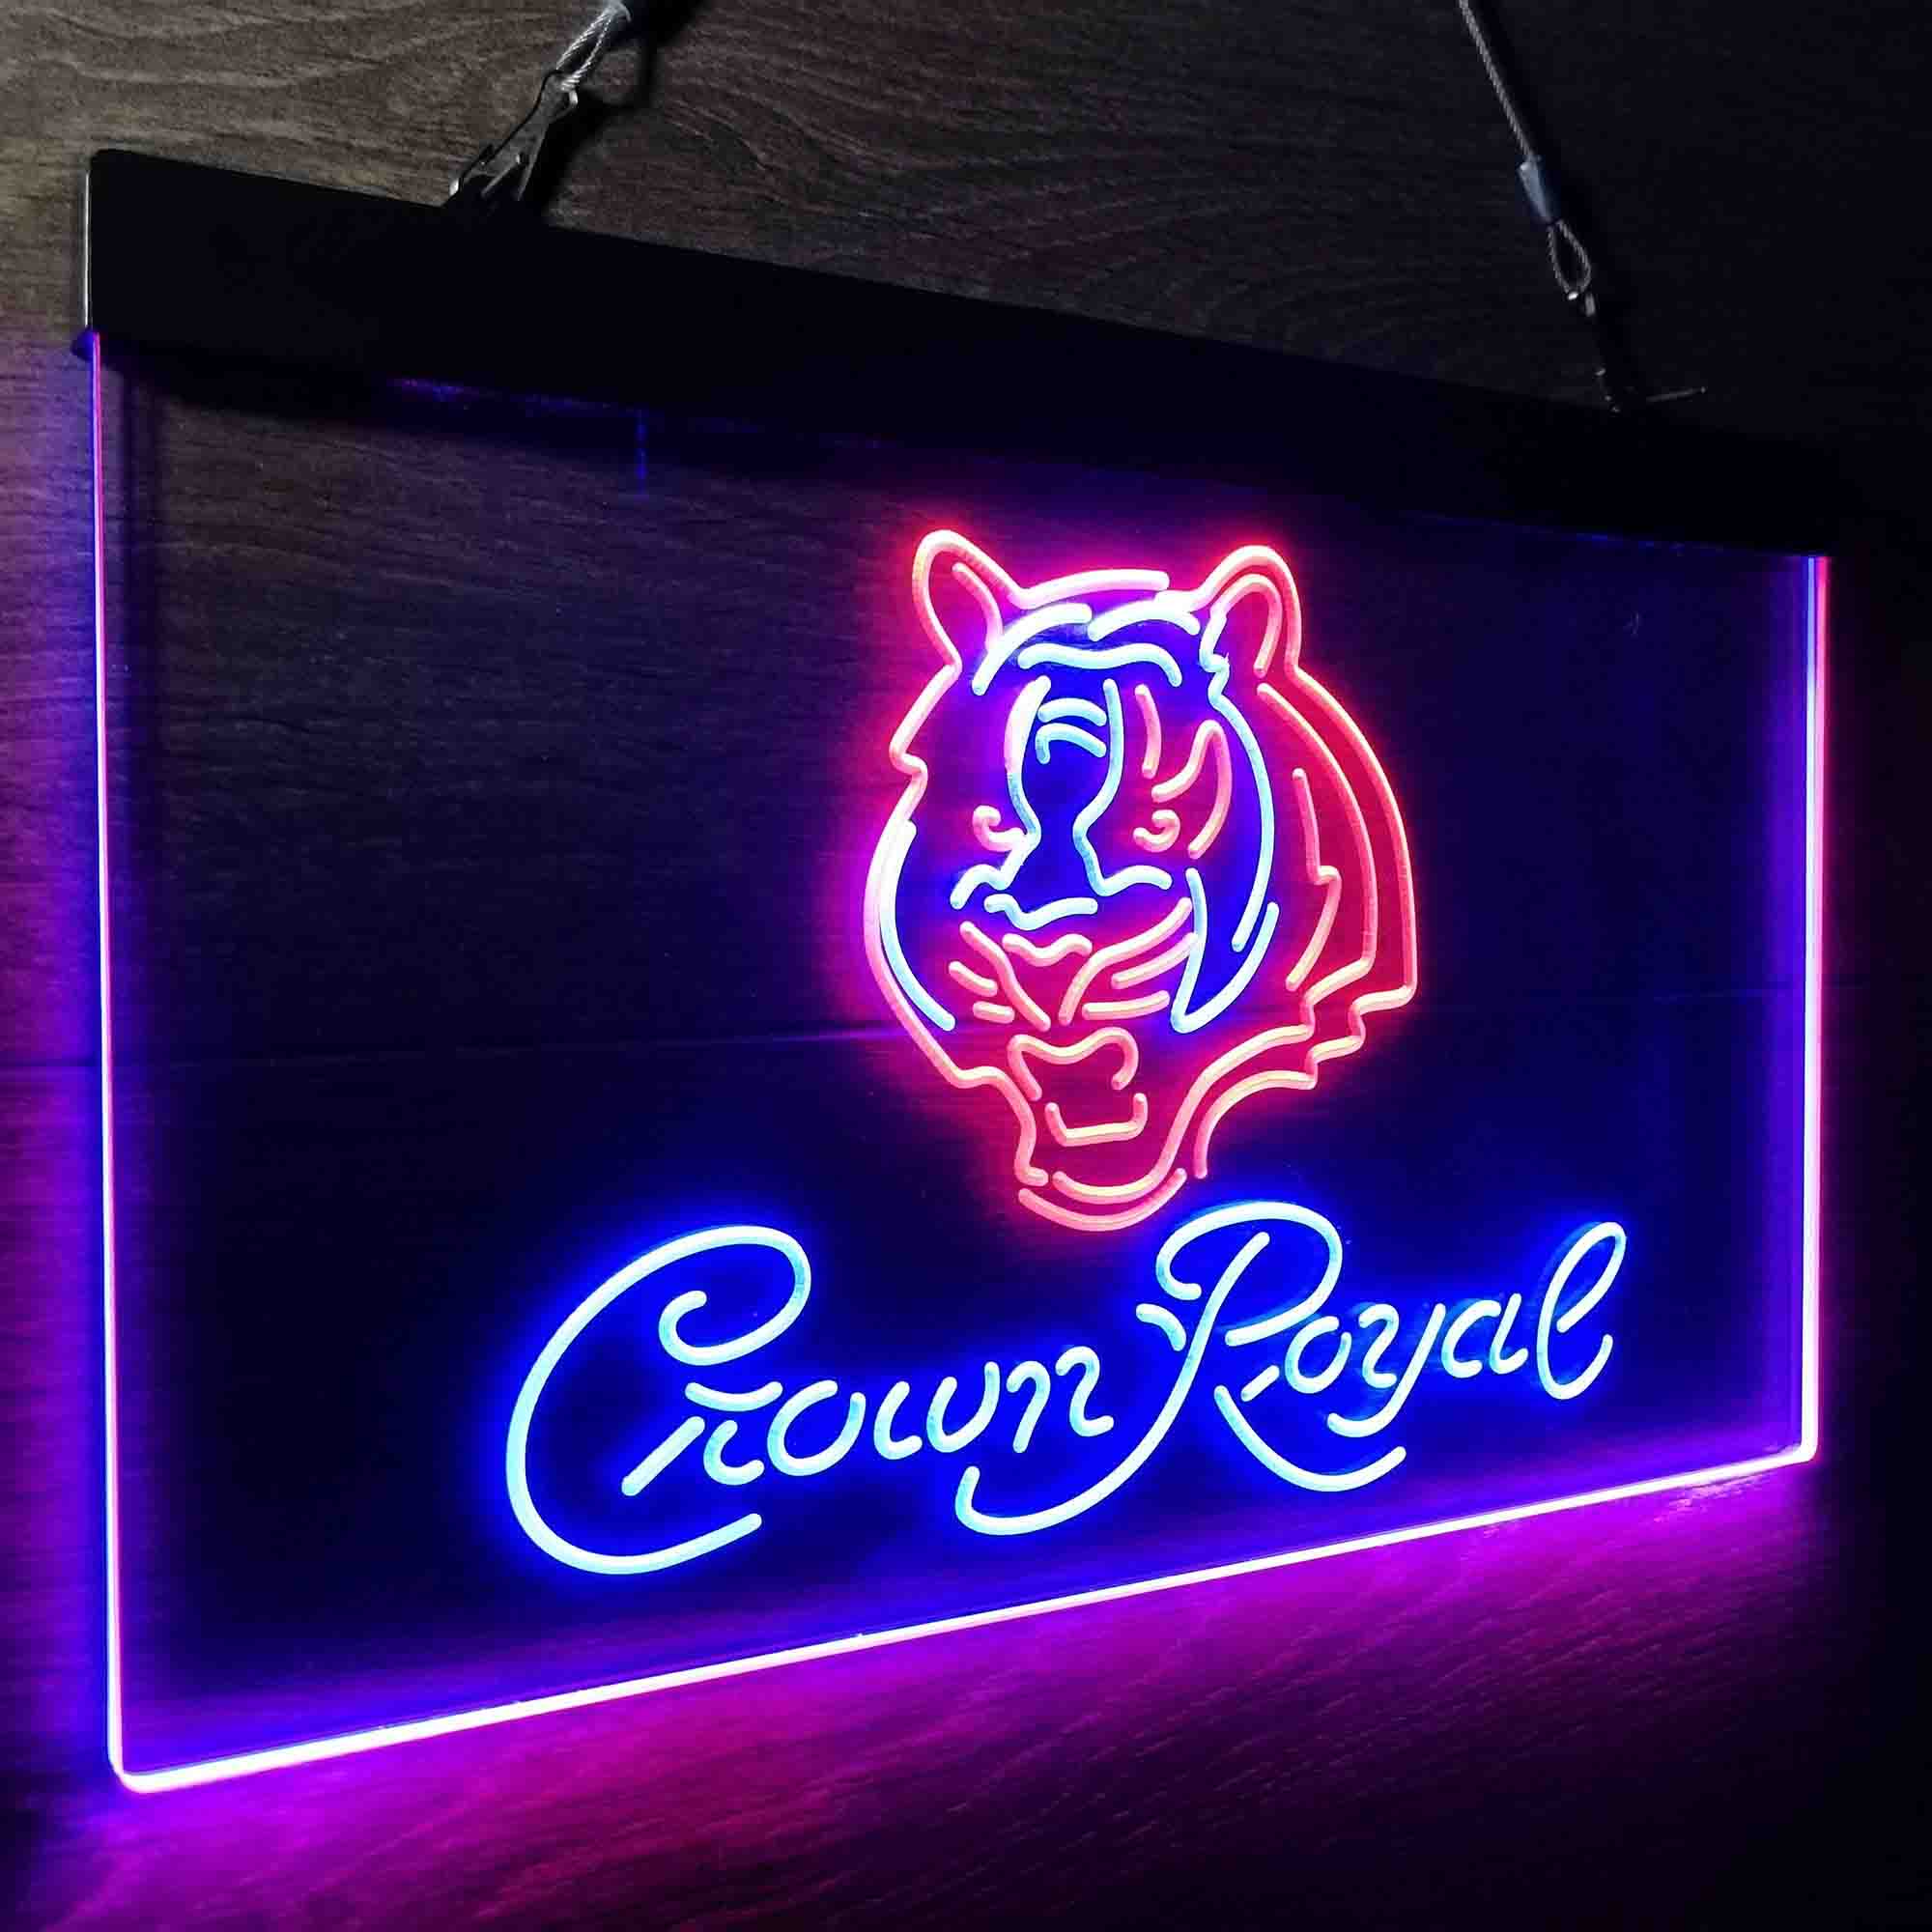 Crown Royal Bar Cincinnati Bengals Est. 1968 LED Neon Sign